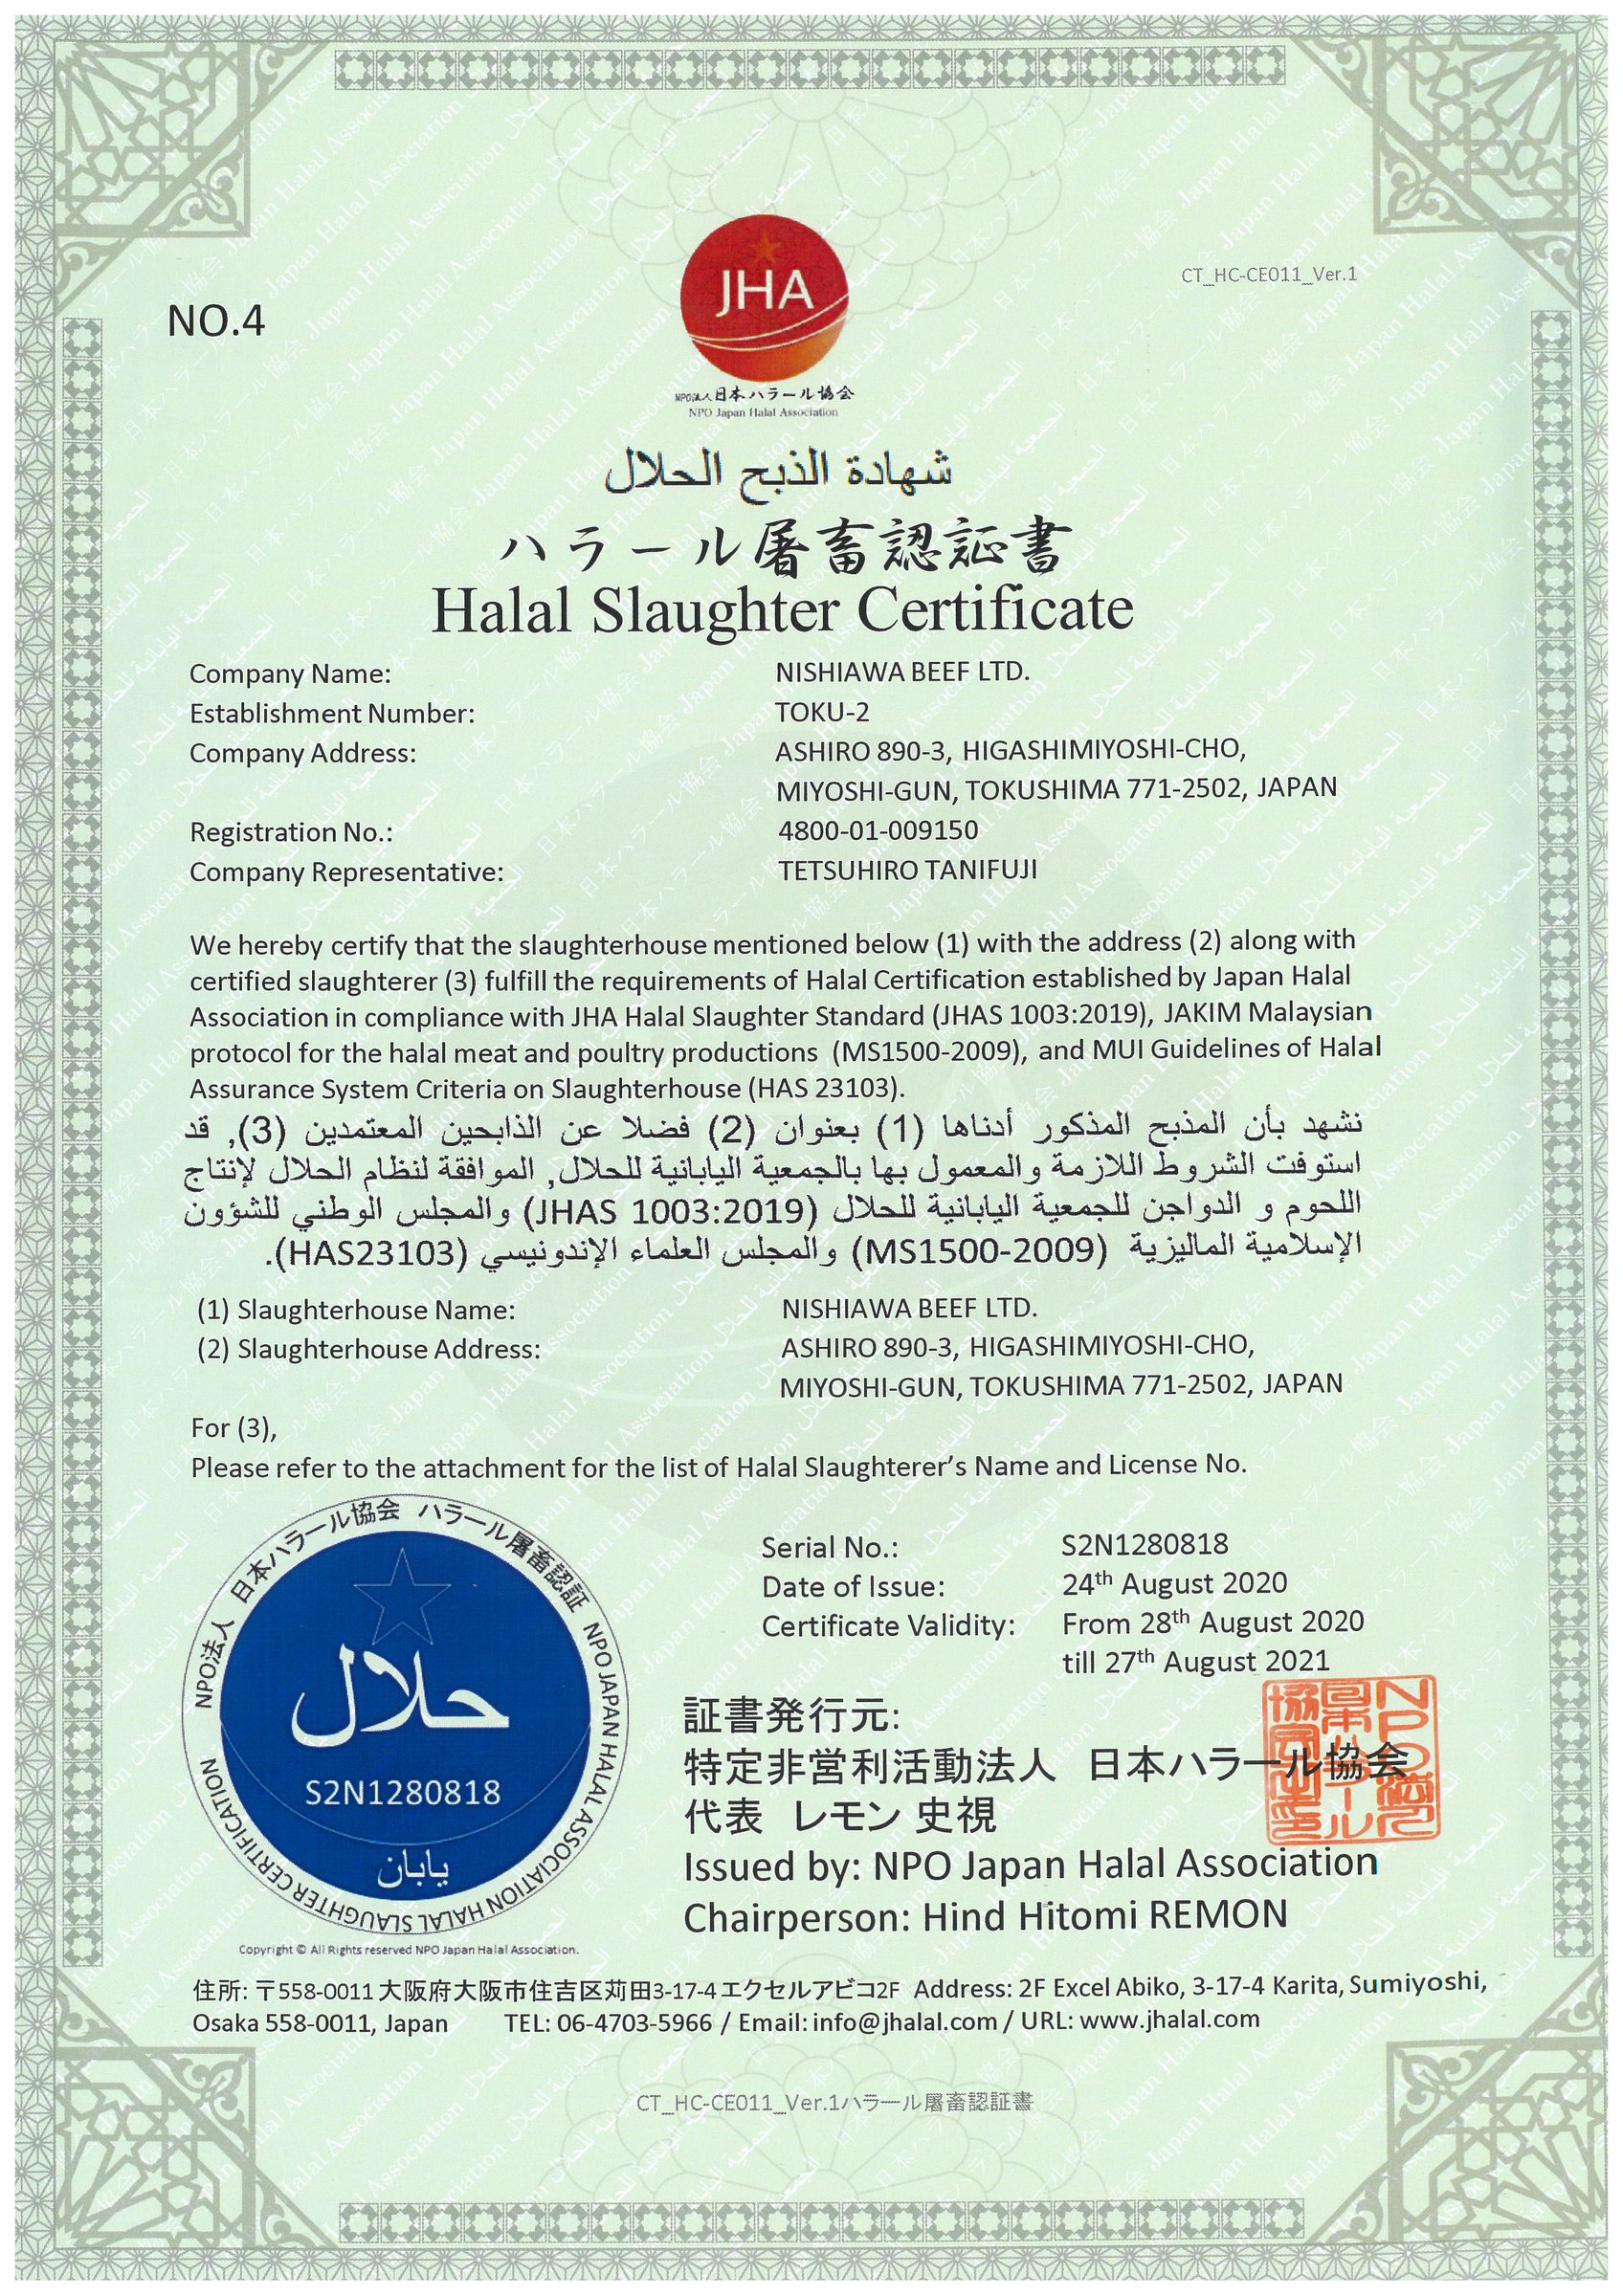 Halal Slaughter Certificate by JHA 2020-2021.jpg